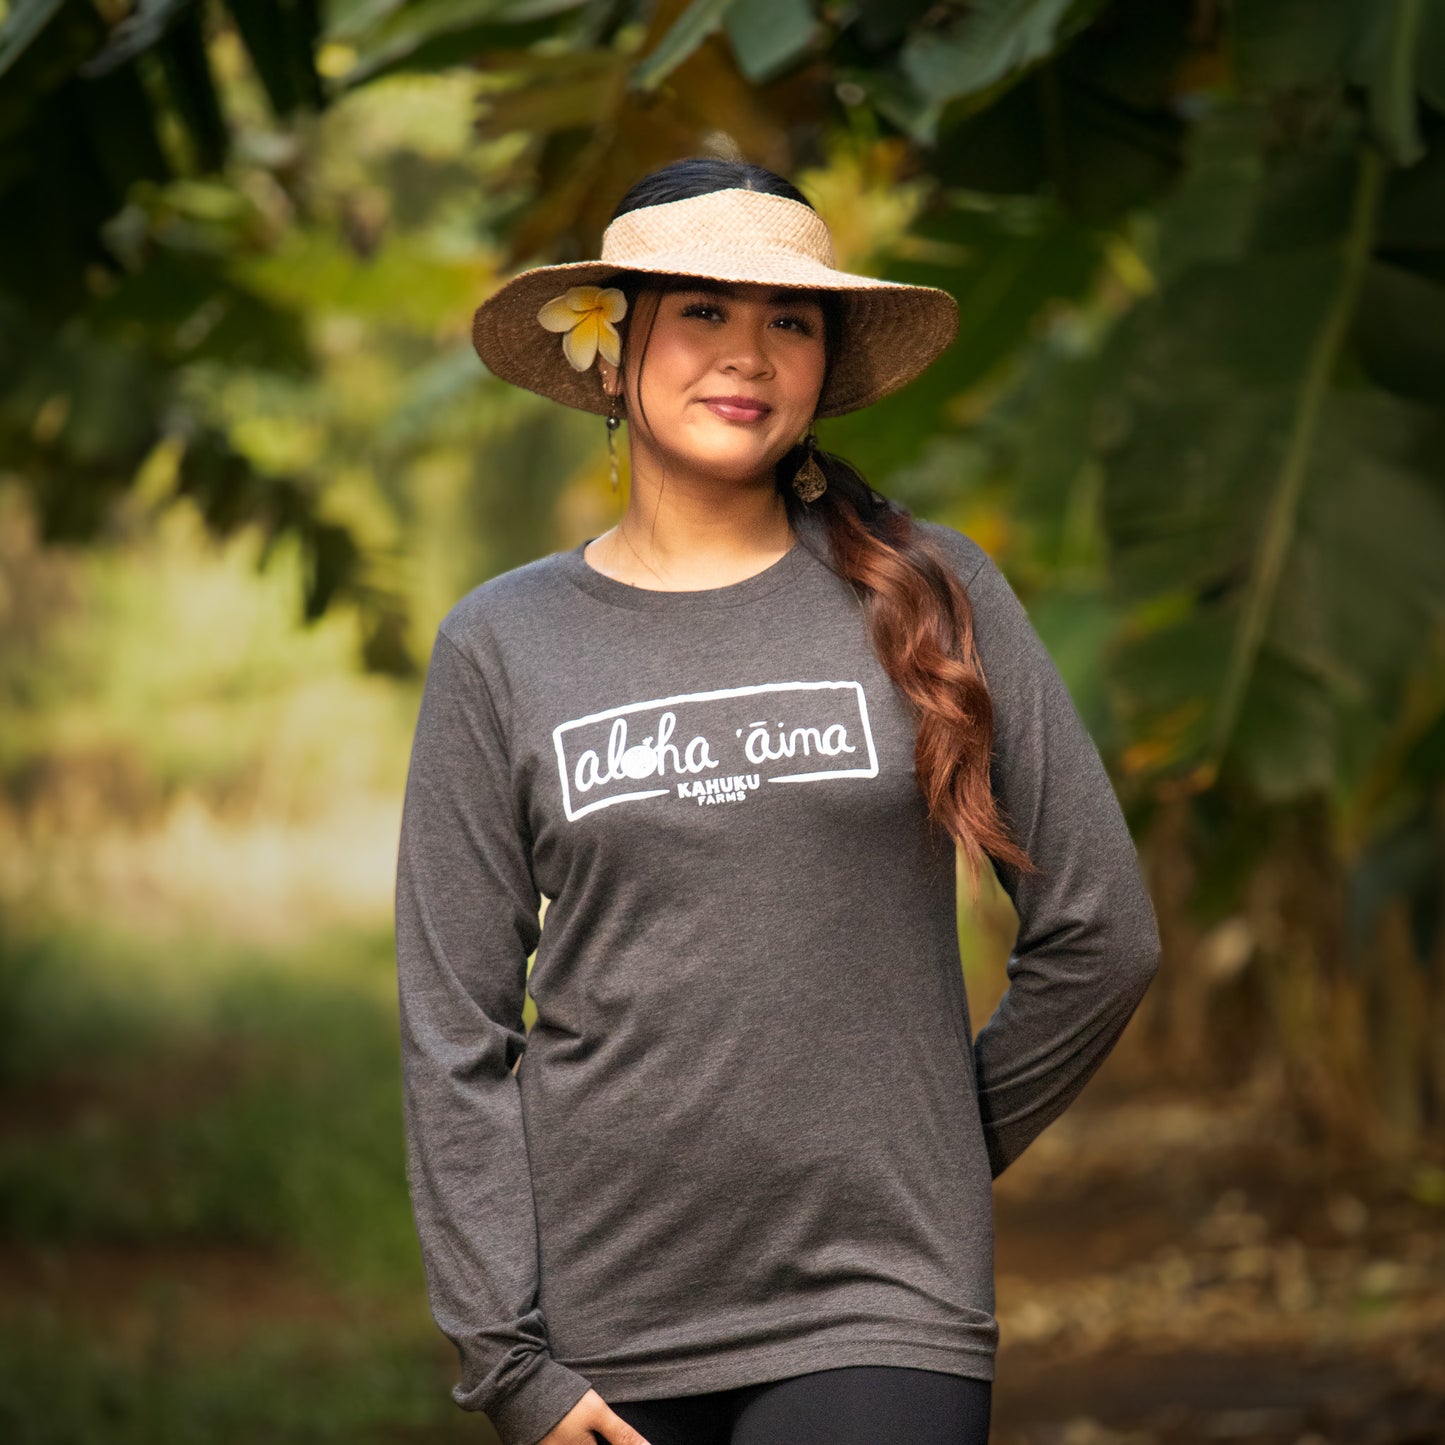 NEW Kahuku Farms Long Sleeve Shirt